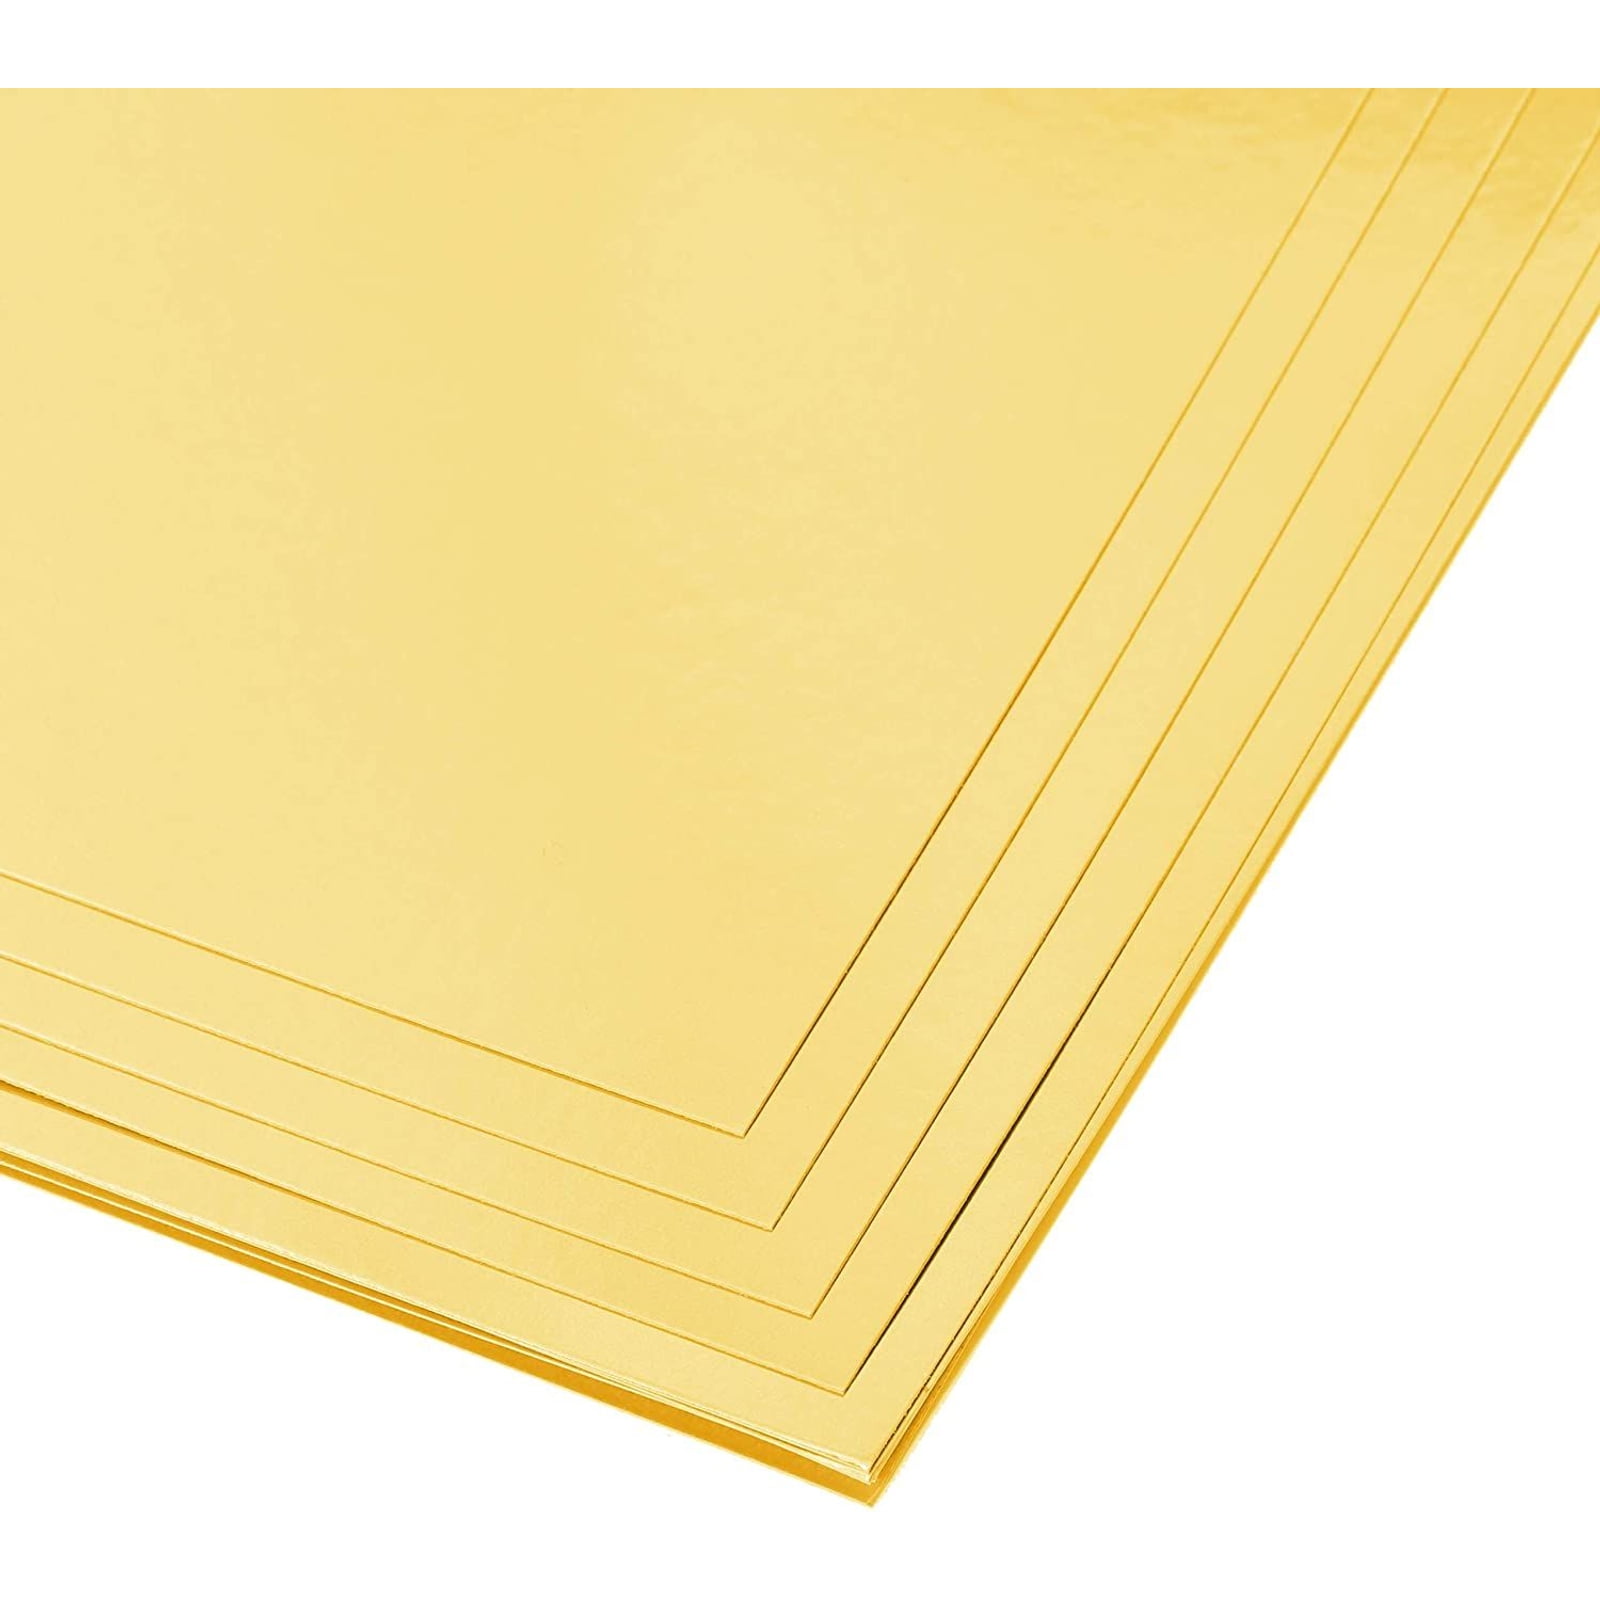 Wholesale NBEADS 50 Sheets 14cmx14cm Gold Foil Papers 